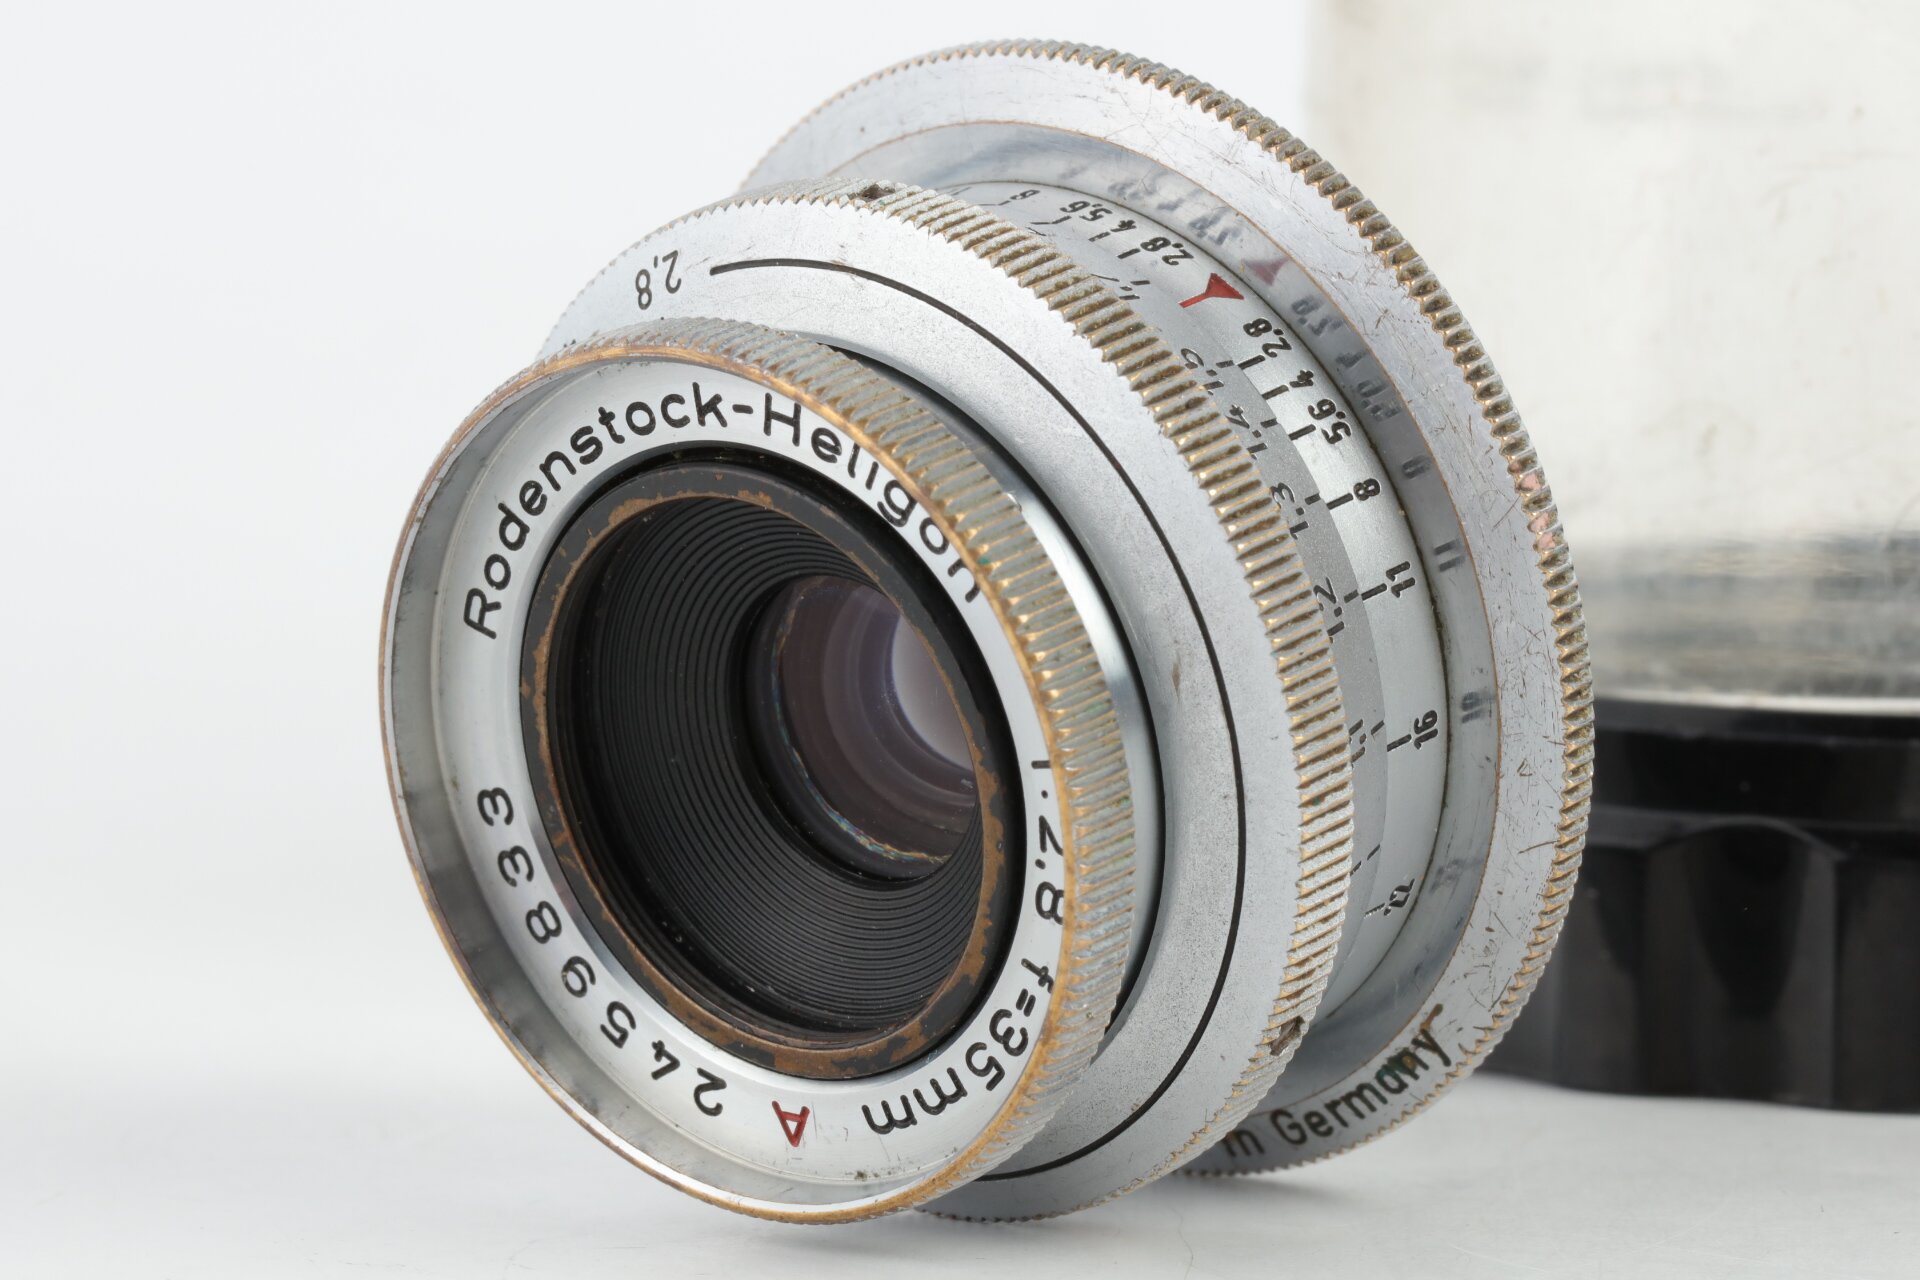 Rodenstock-Heligon 2,8/35mm A M39